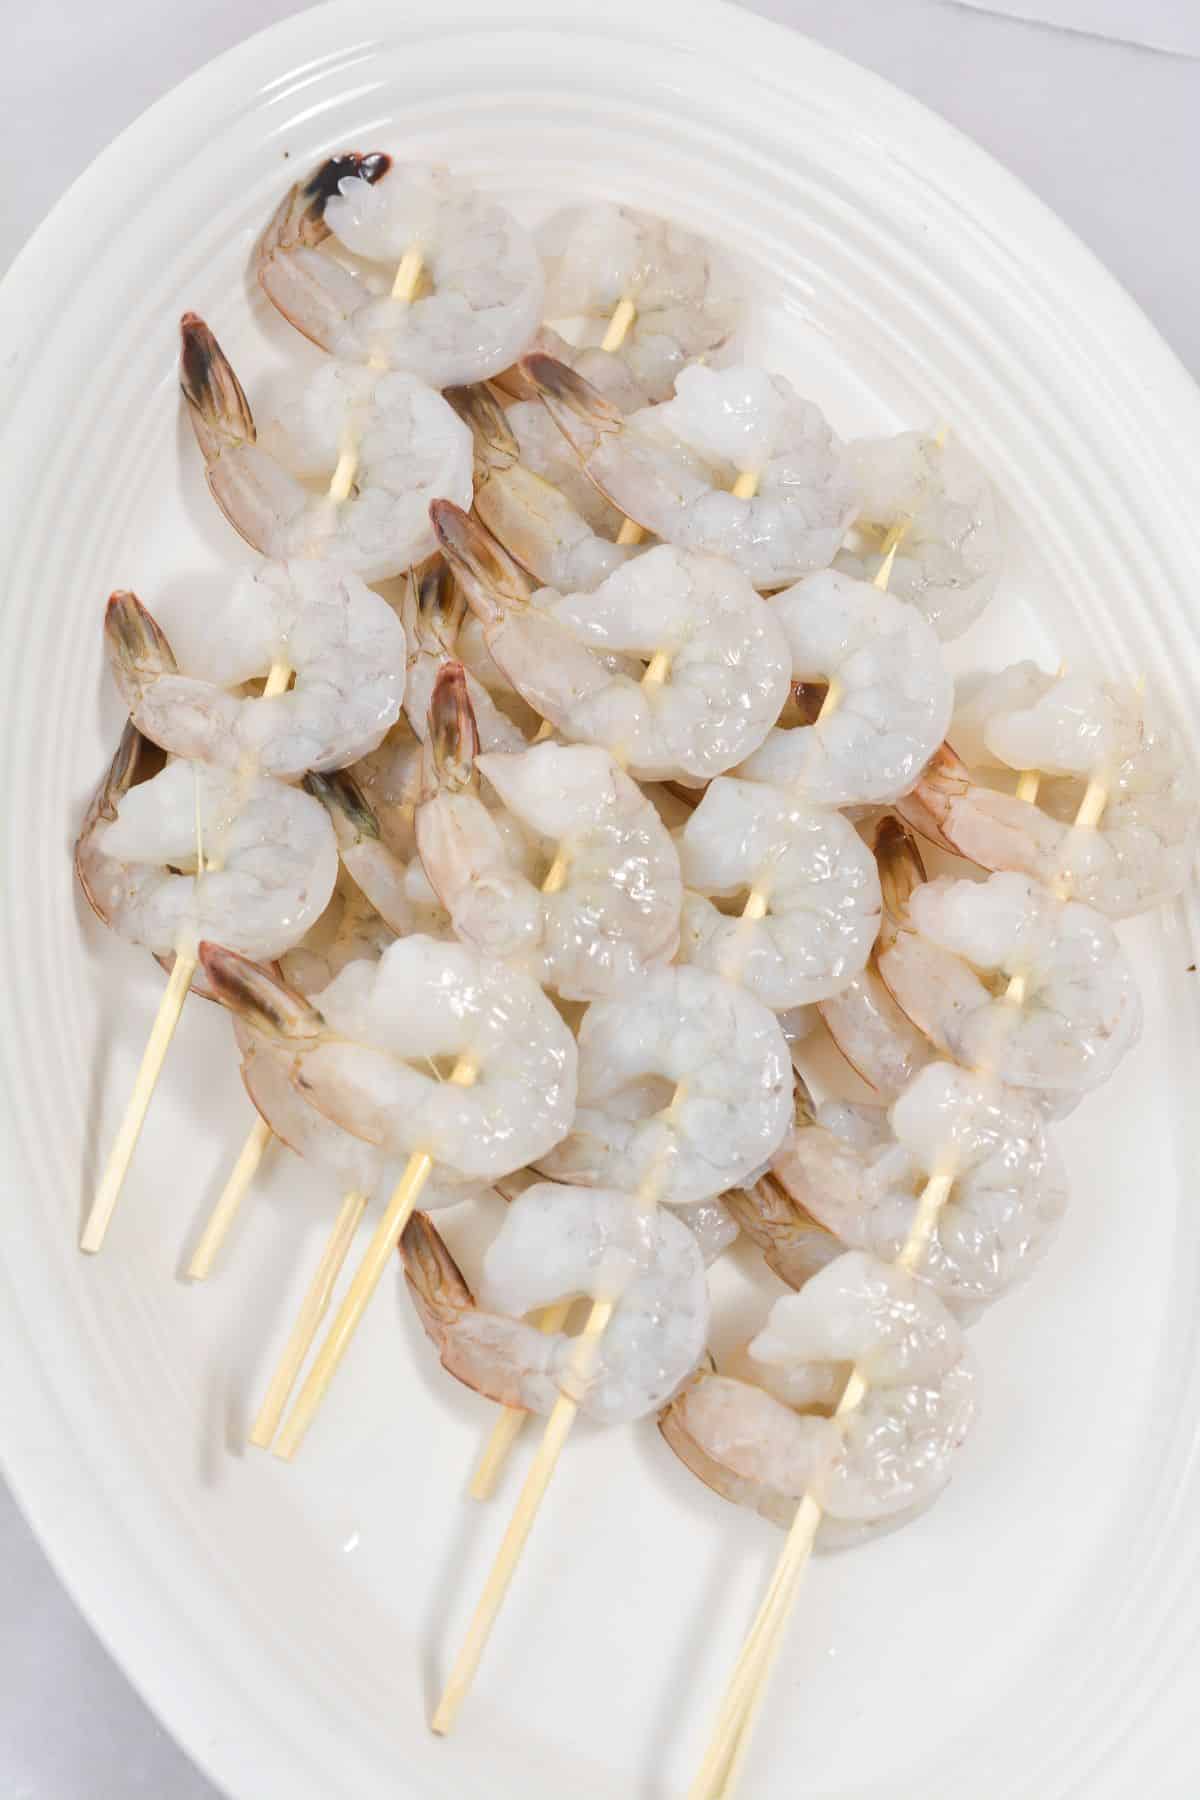 Shrimp on wooden skewers on a white platter